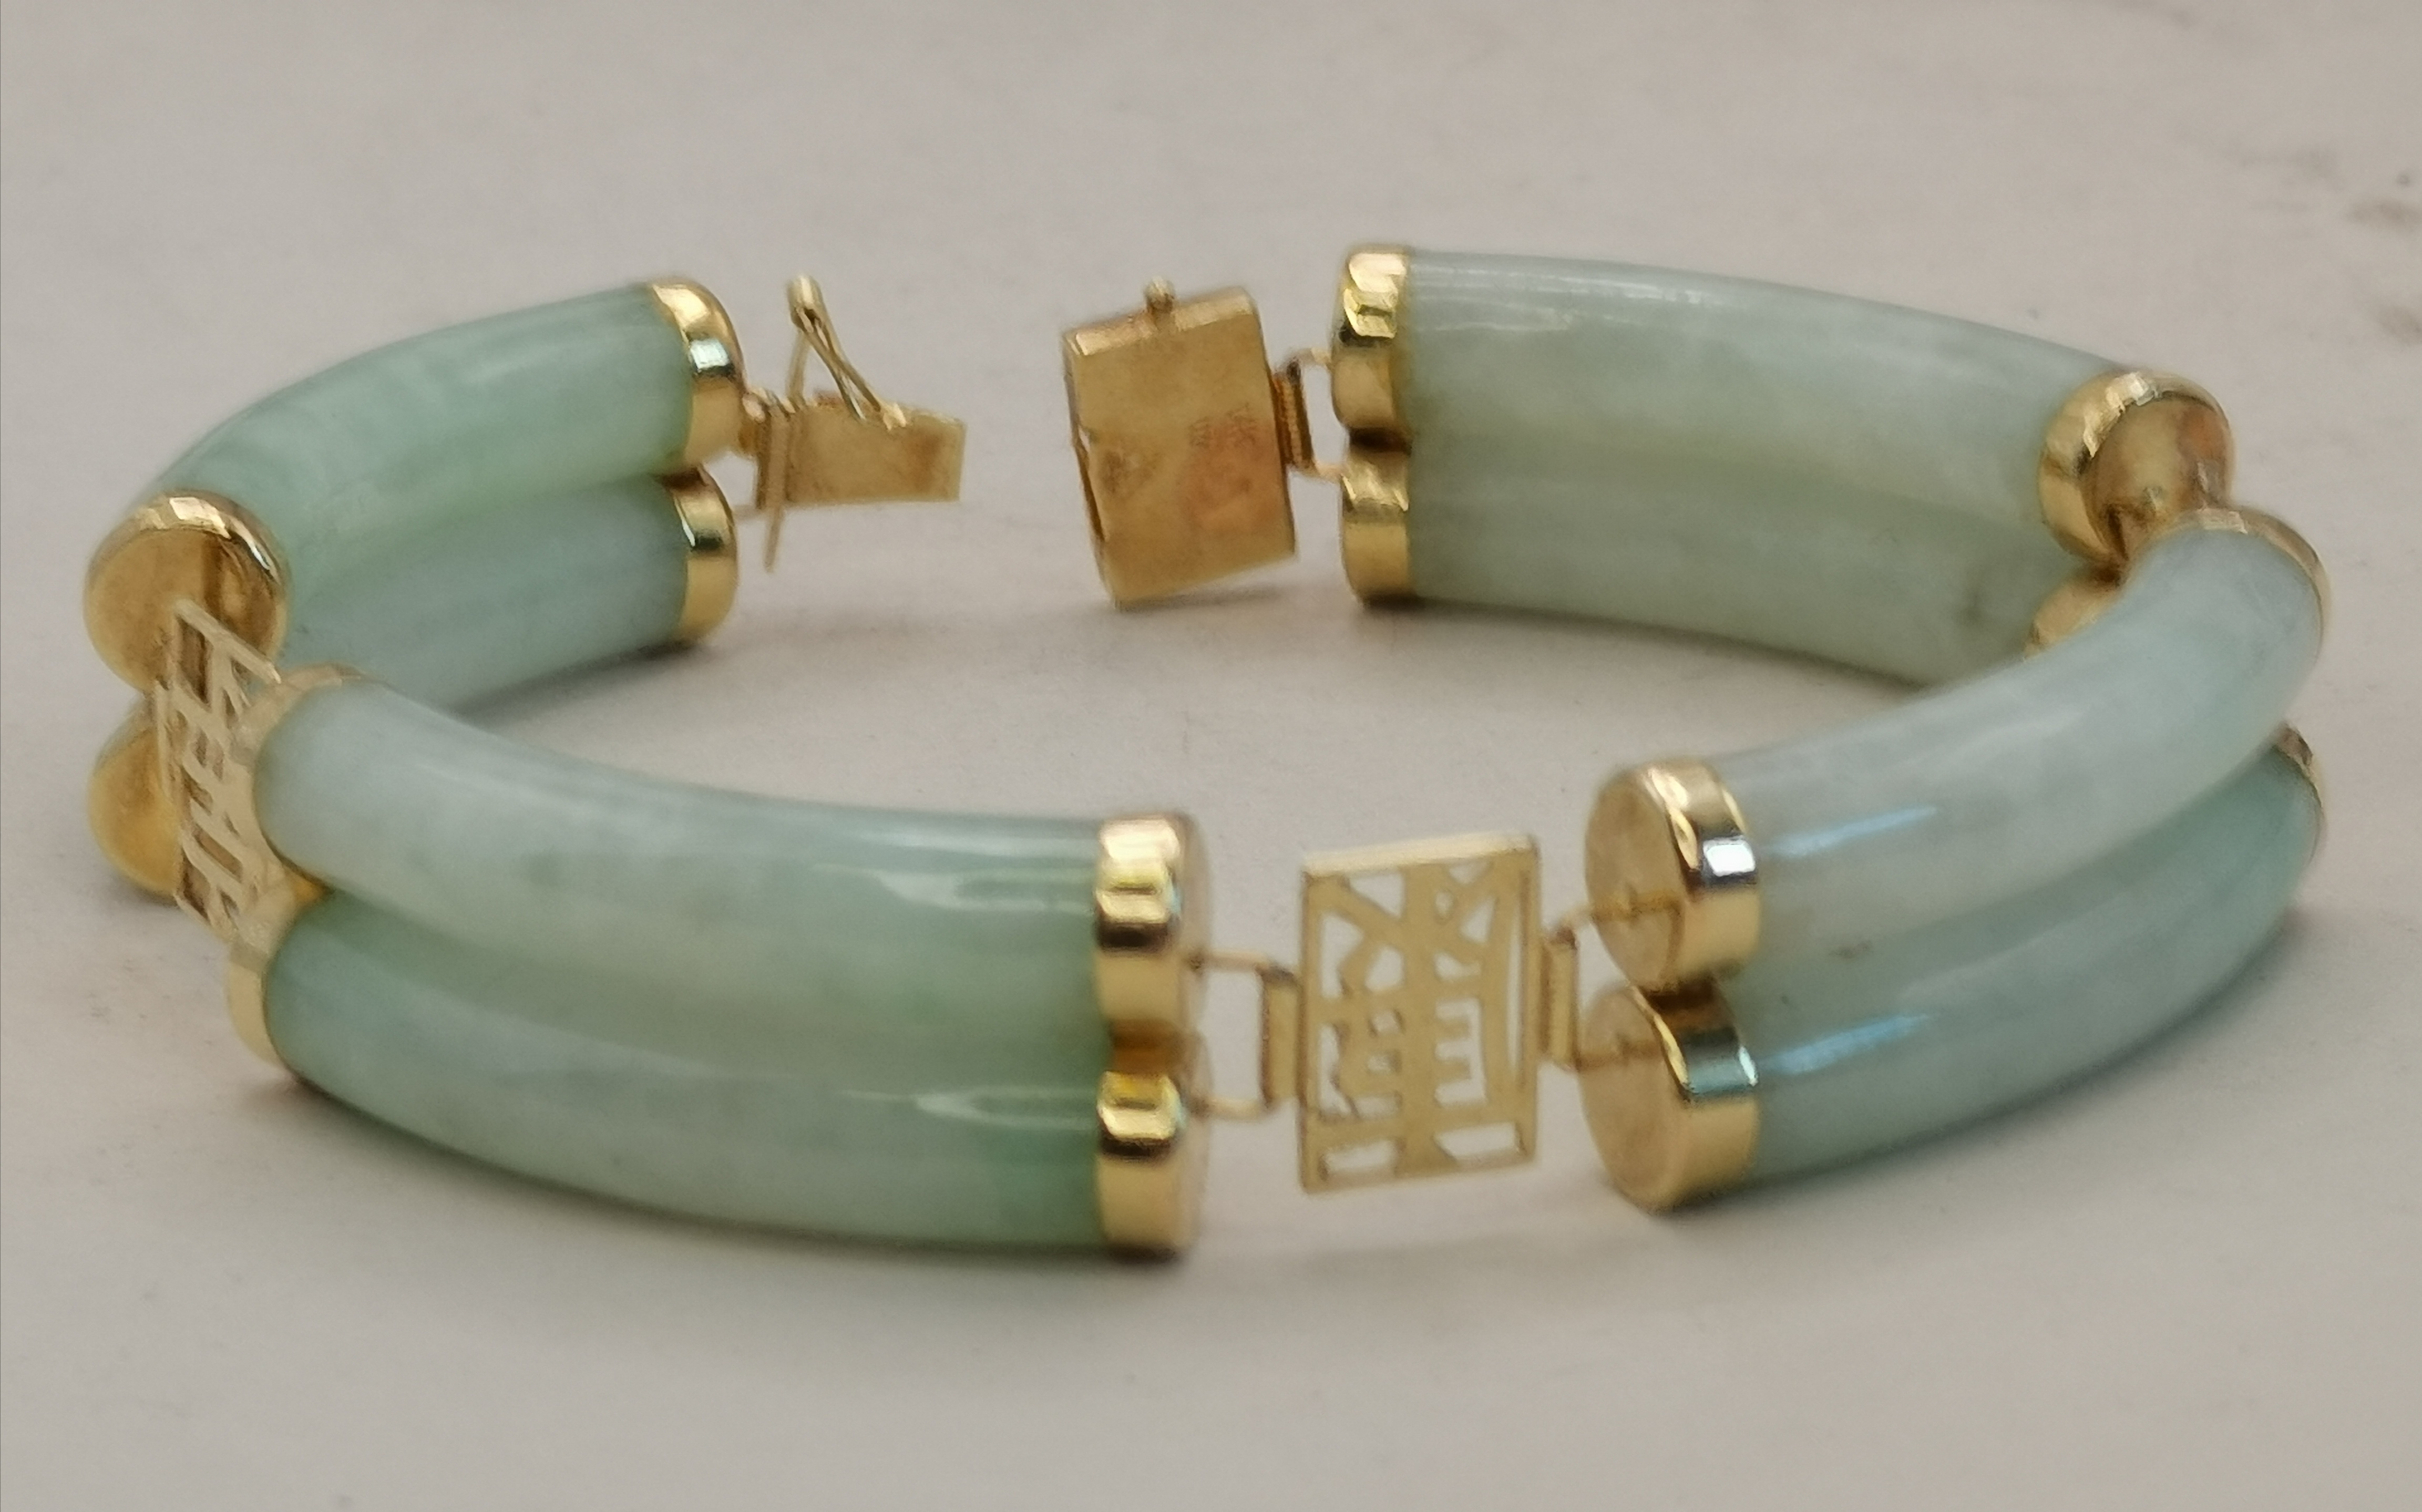 A 14 carat gold mounted jade bracelet